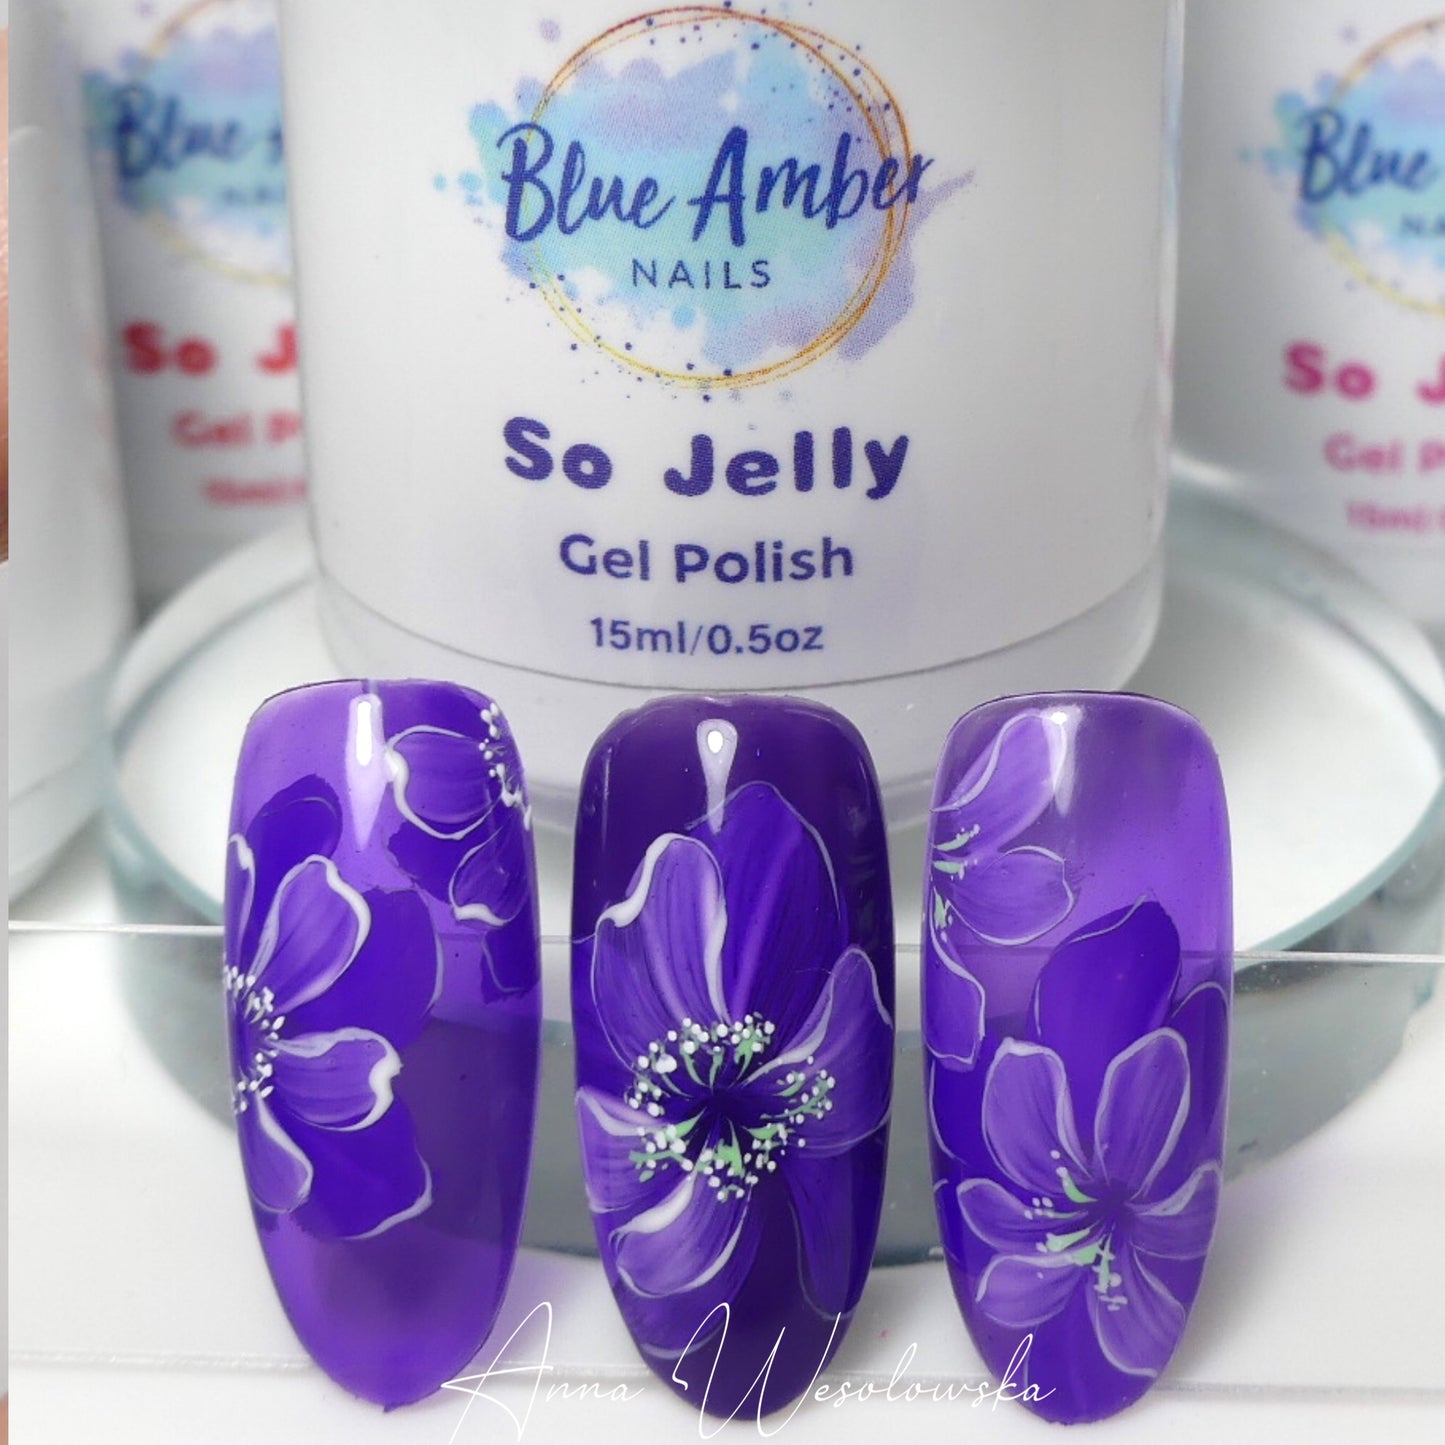 So Jelly Gel Polish - Violet